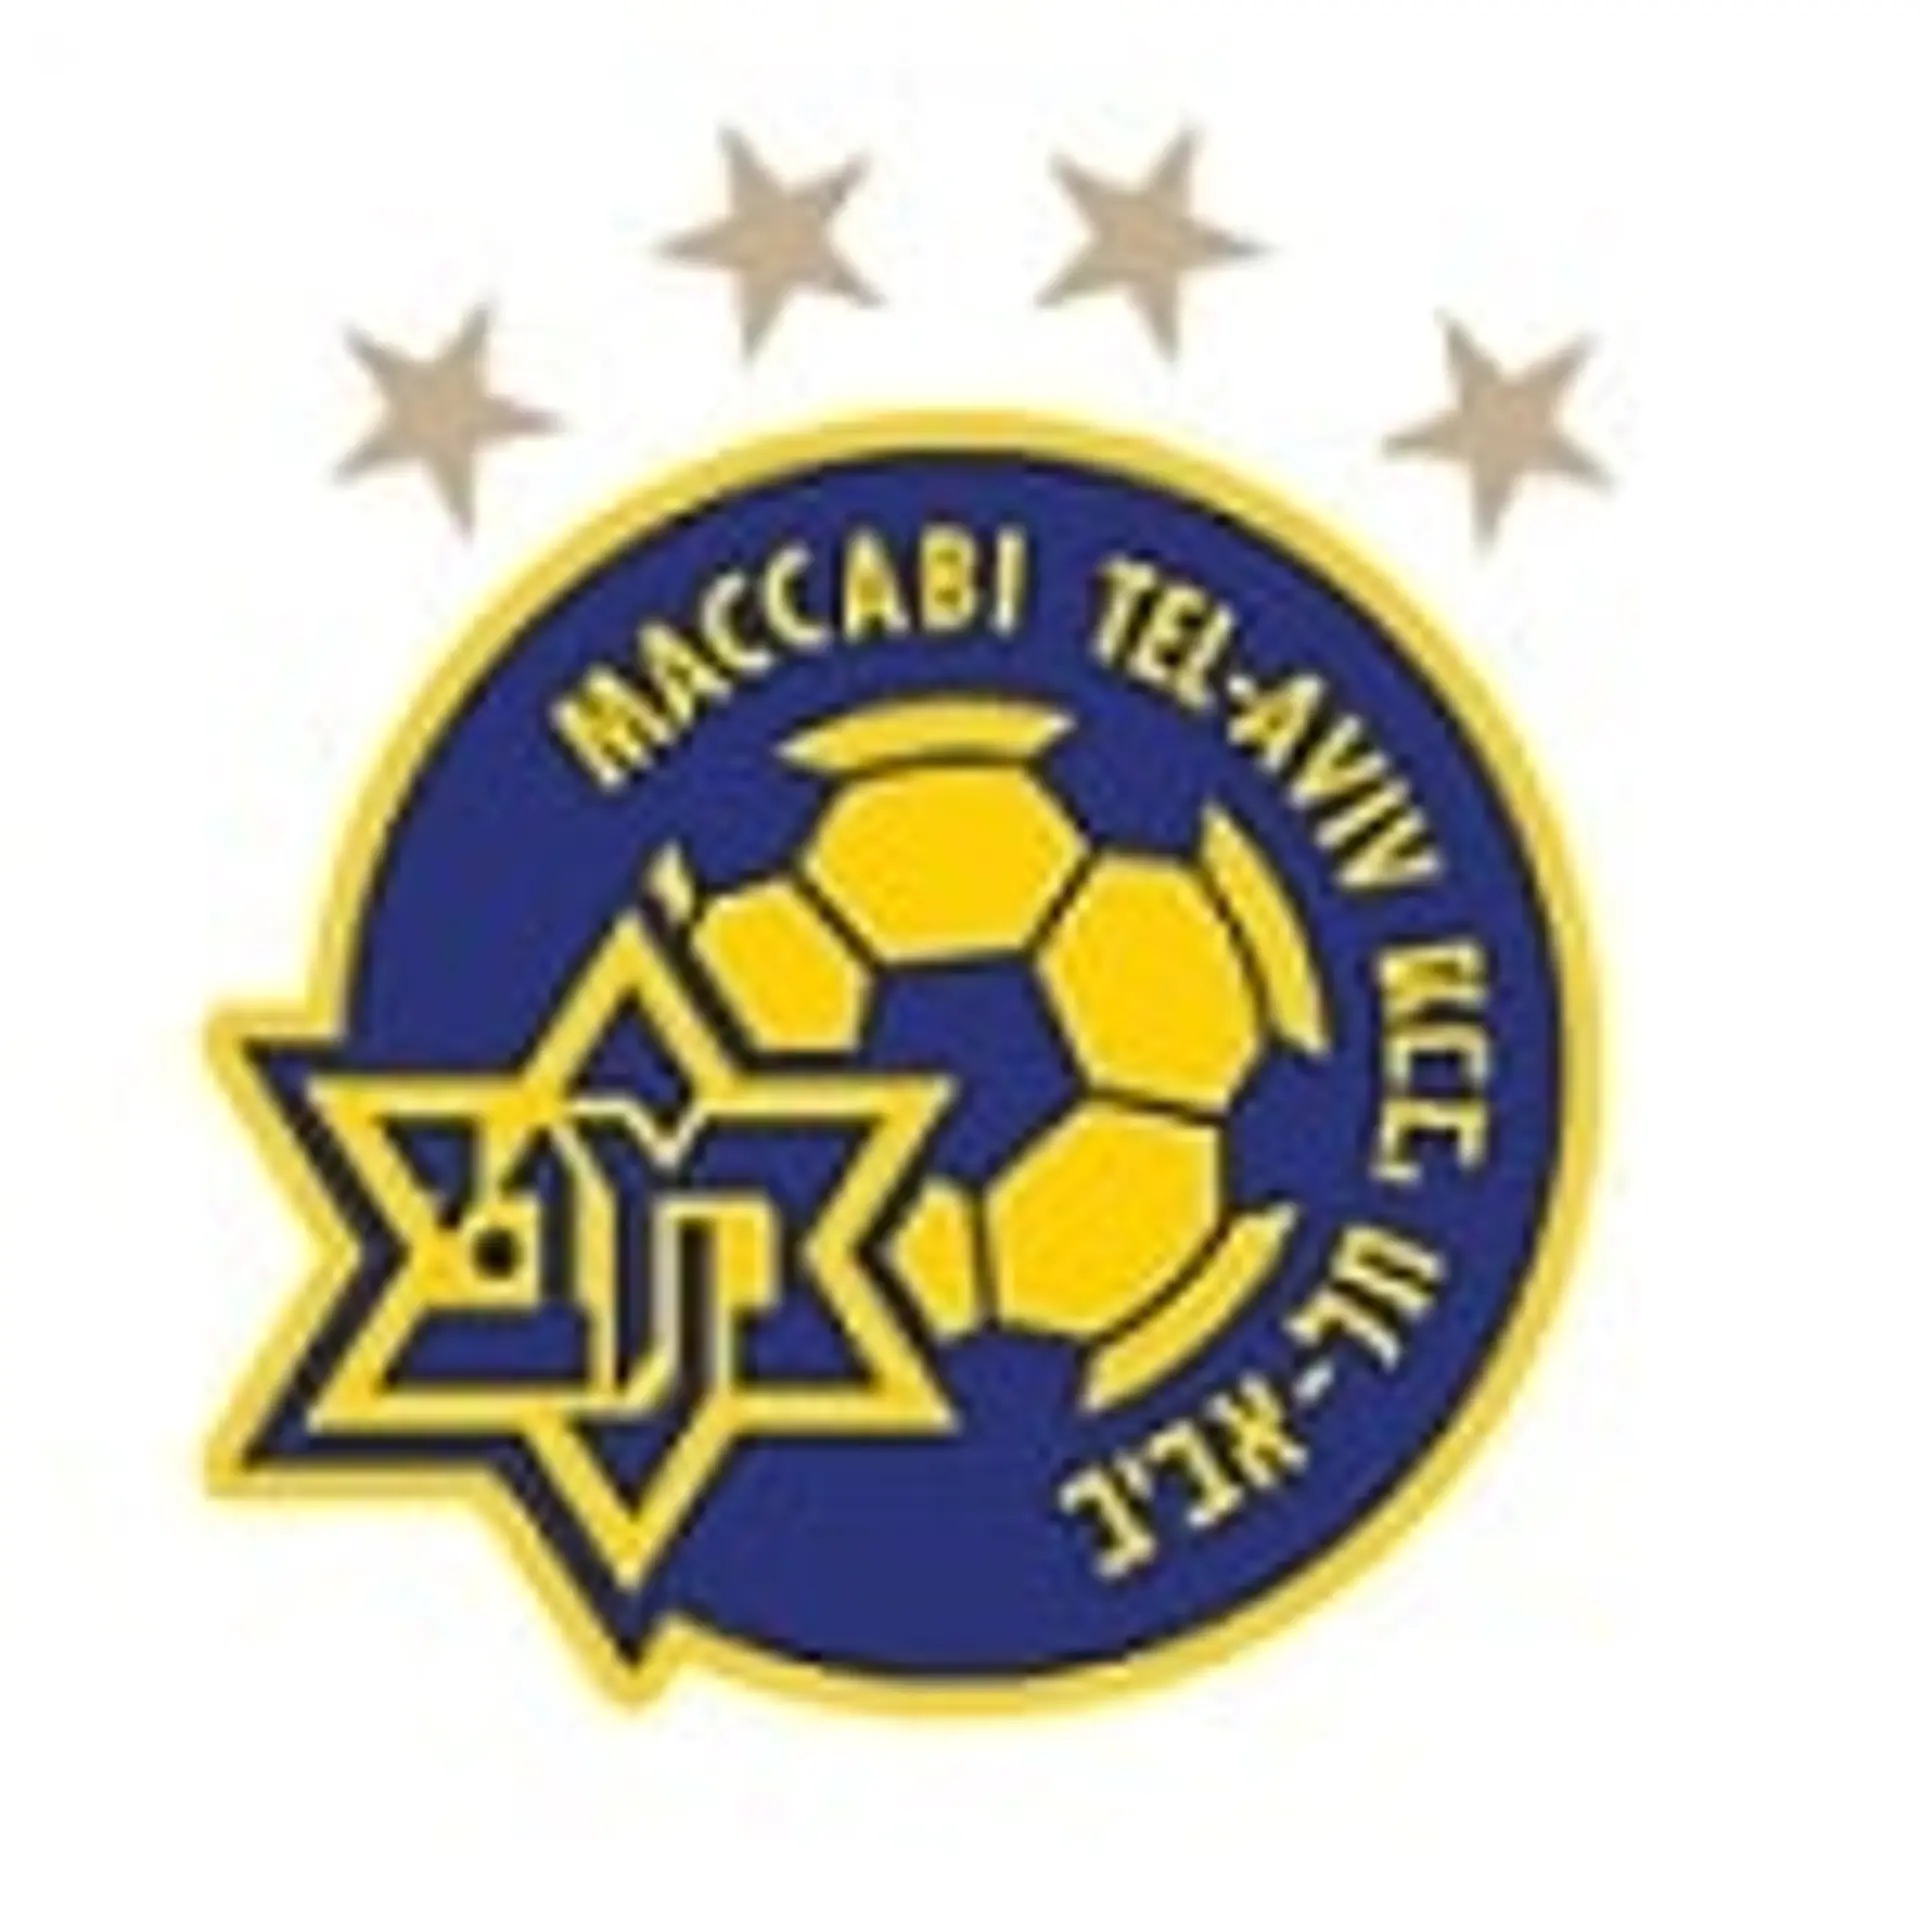 Maccabi Tel Aviv Fans 